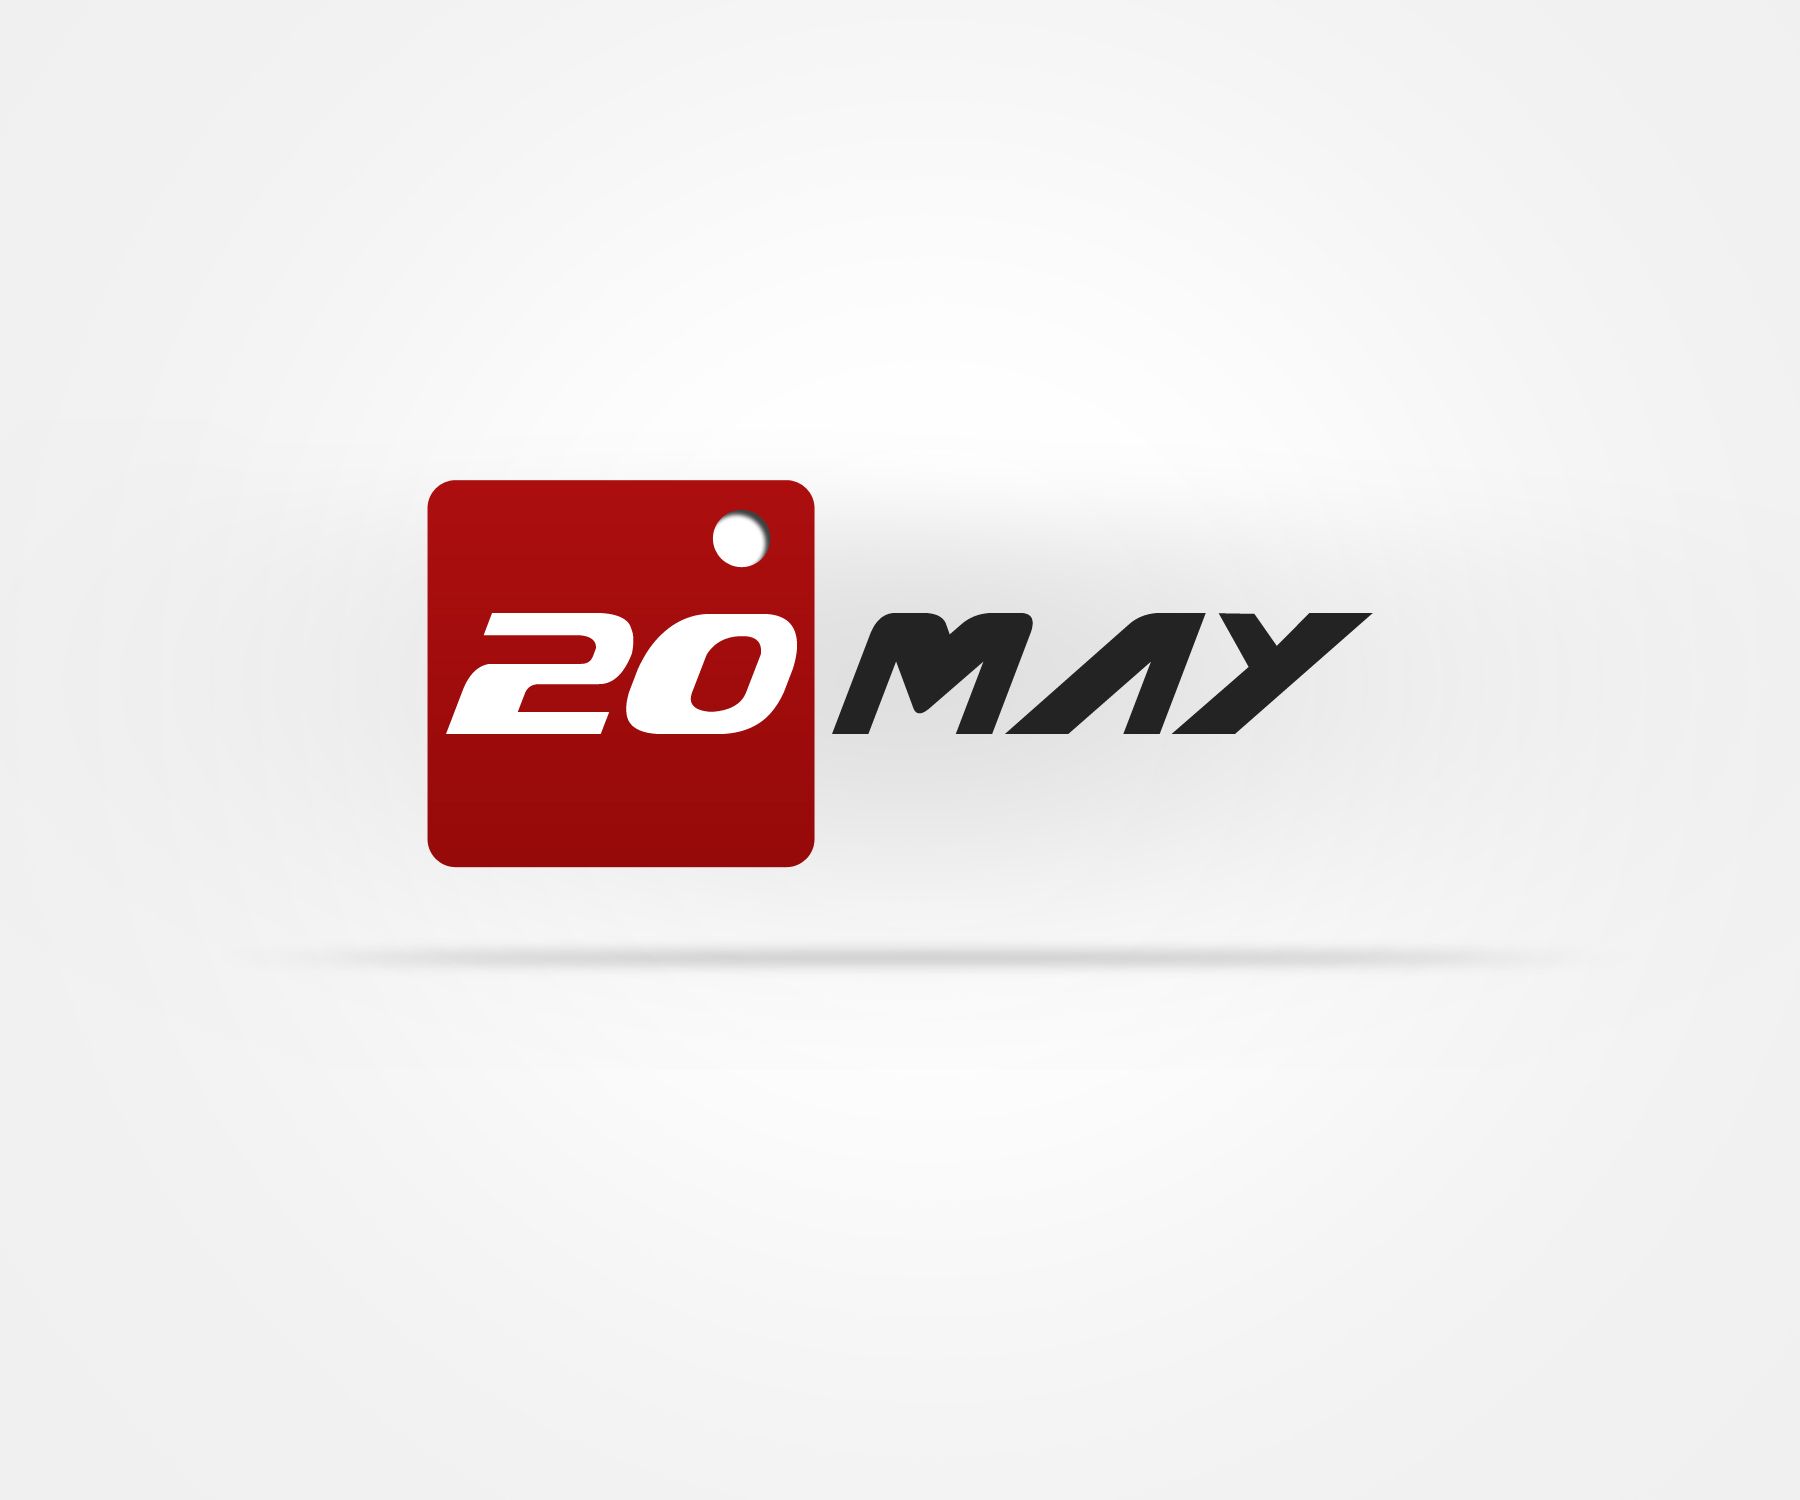 20MAY Project - дизайнер bonvian